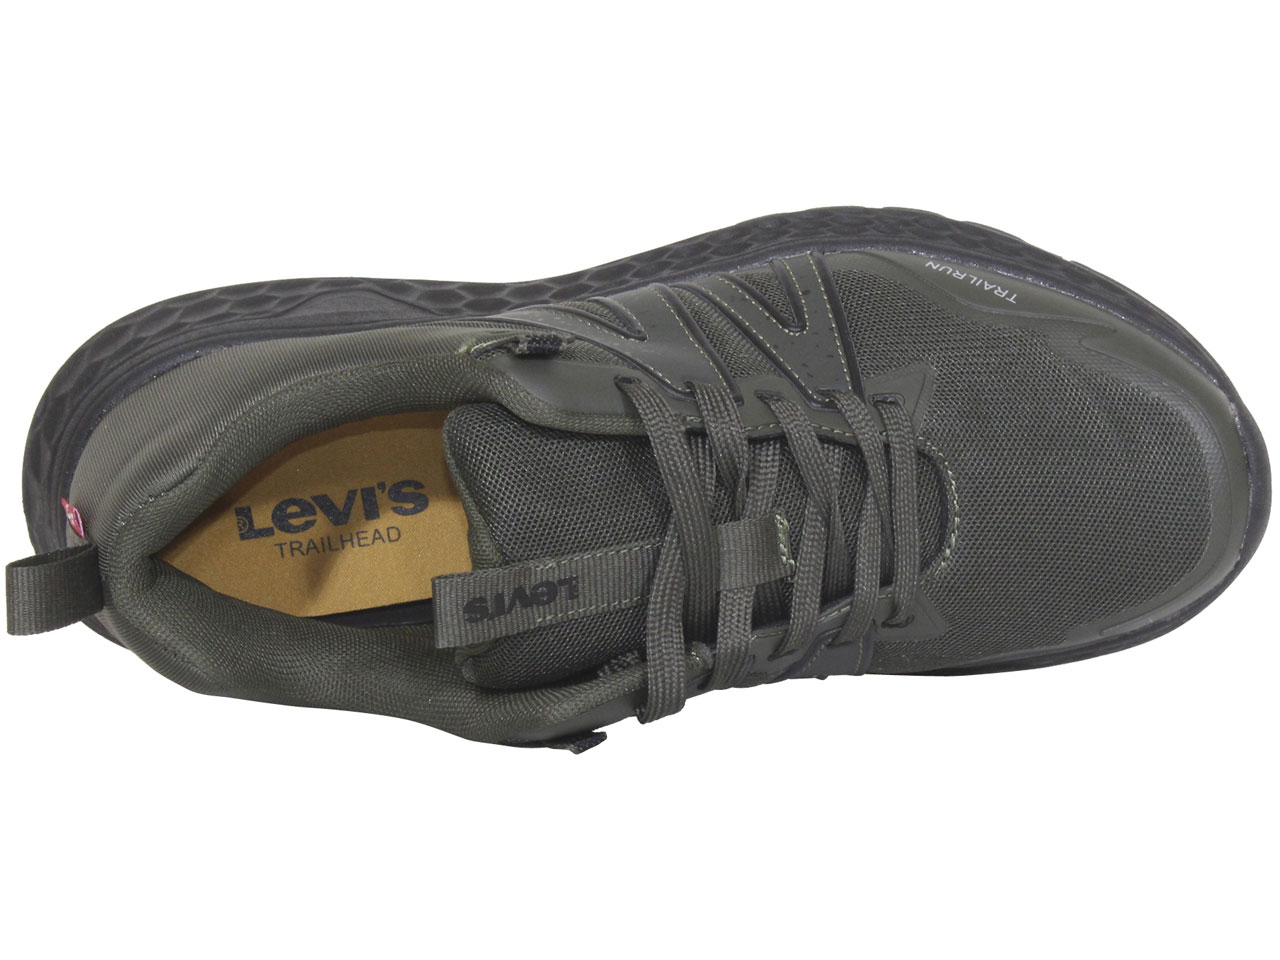 Levis Men's Newbury-Trail Sneakers Low-Top Running Shoes Olive/Black Sz: 12  